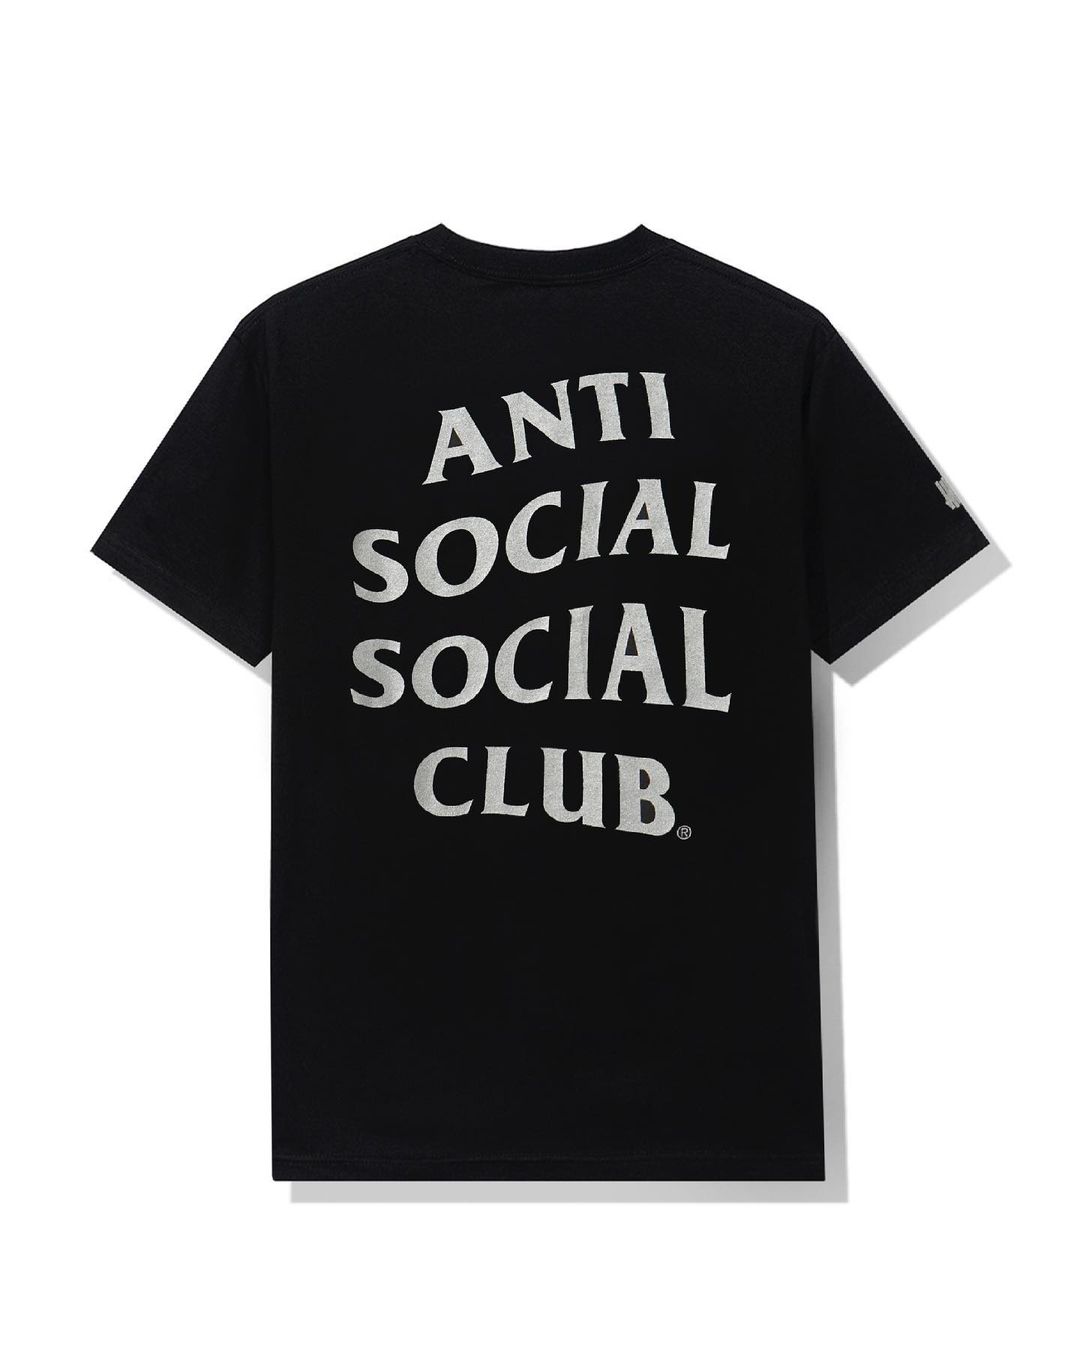 Anti Social Social Club × UNDEFEATED 最新コラボ”PARANOID”が、5/8 発売 (アンチ ソーシャル ソーシャル クラブ アンディフィーテッド)